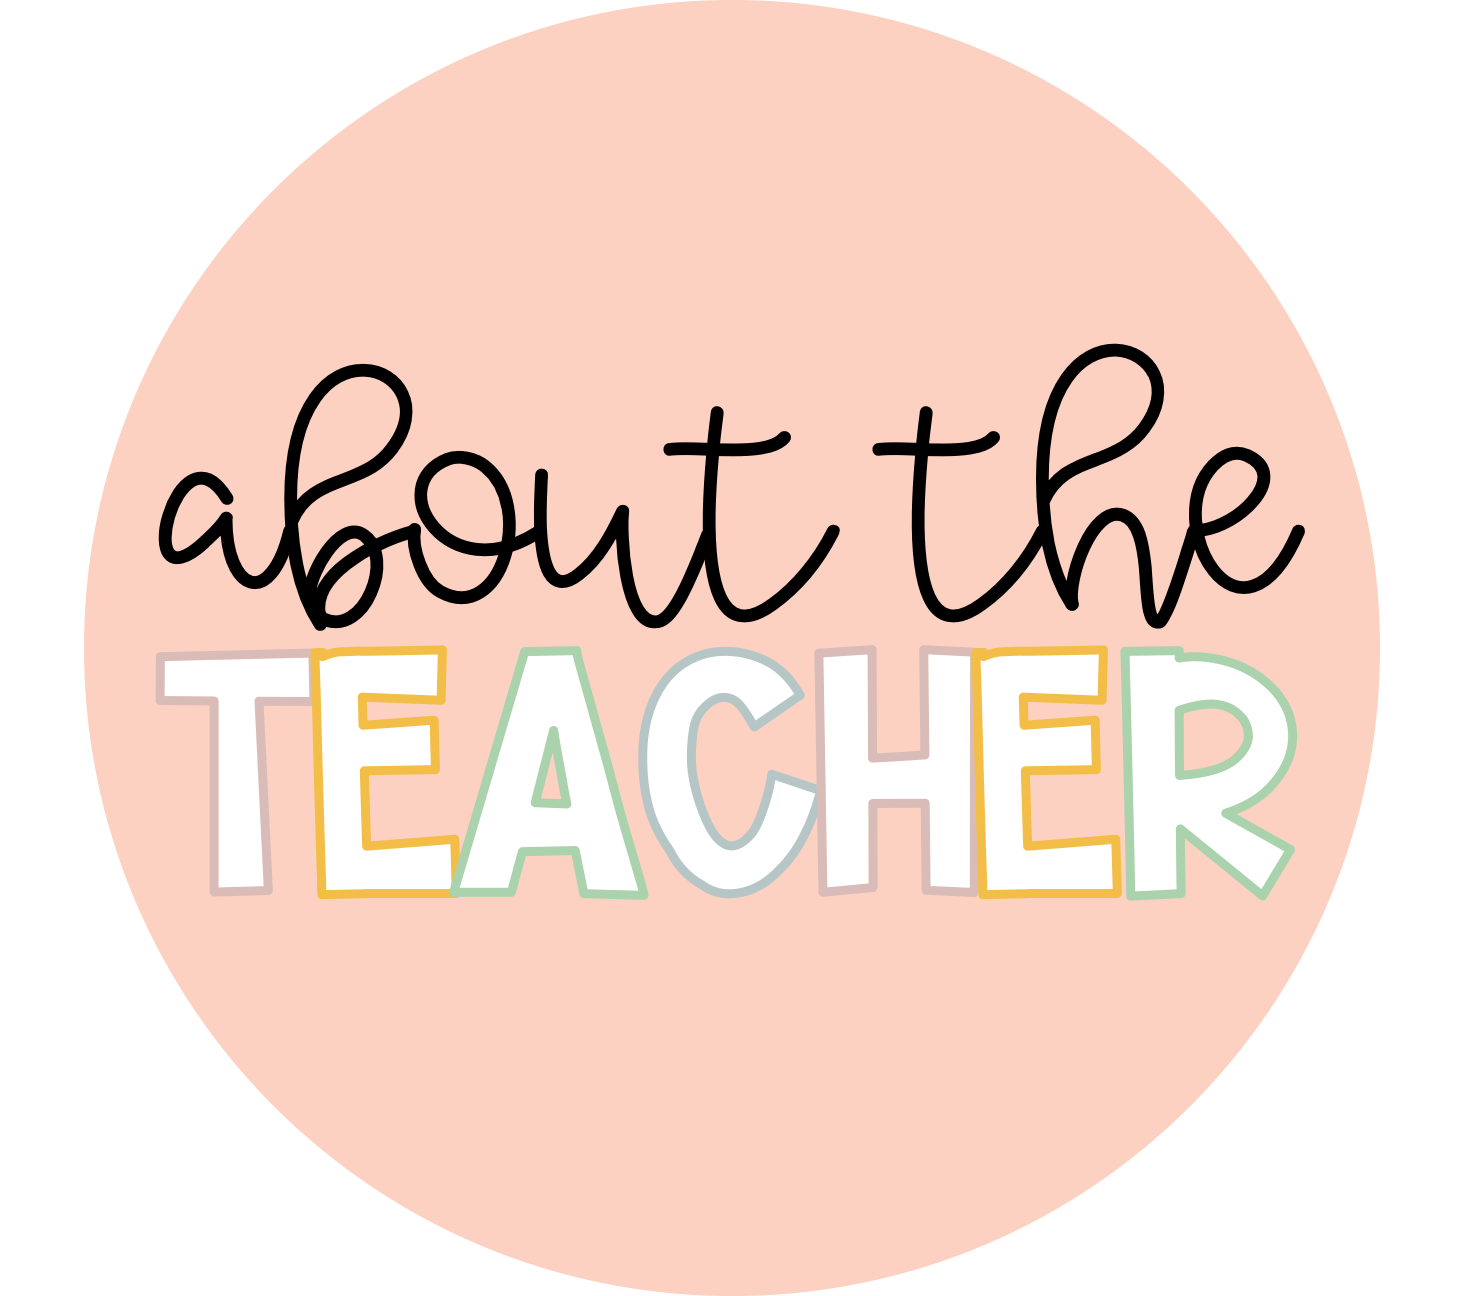 about the teacher